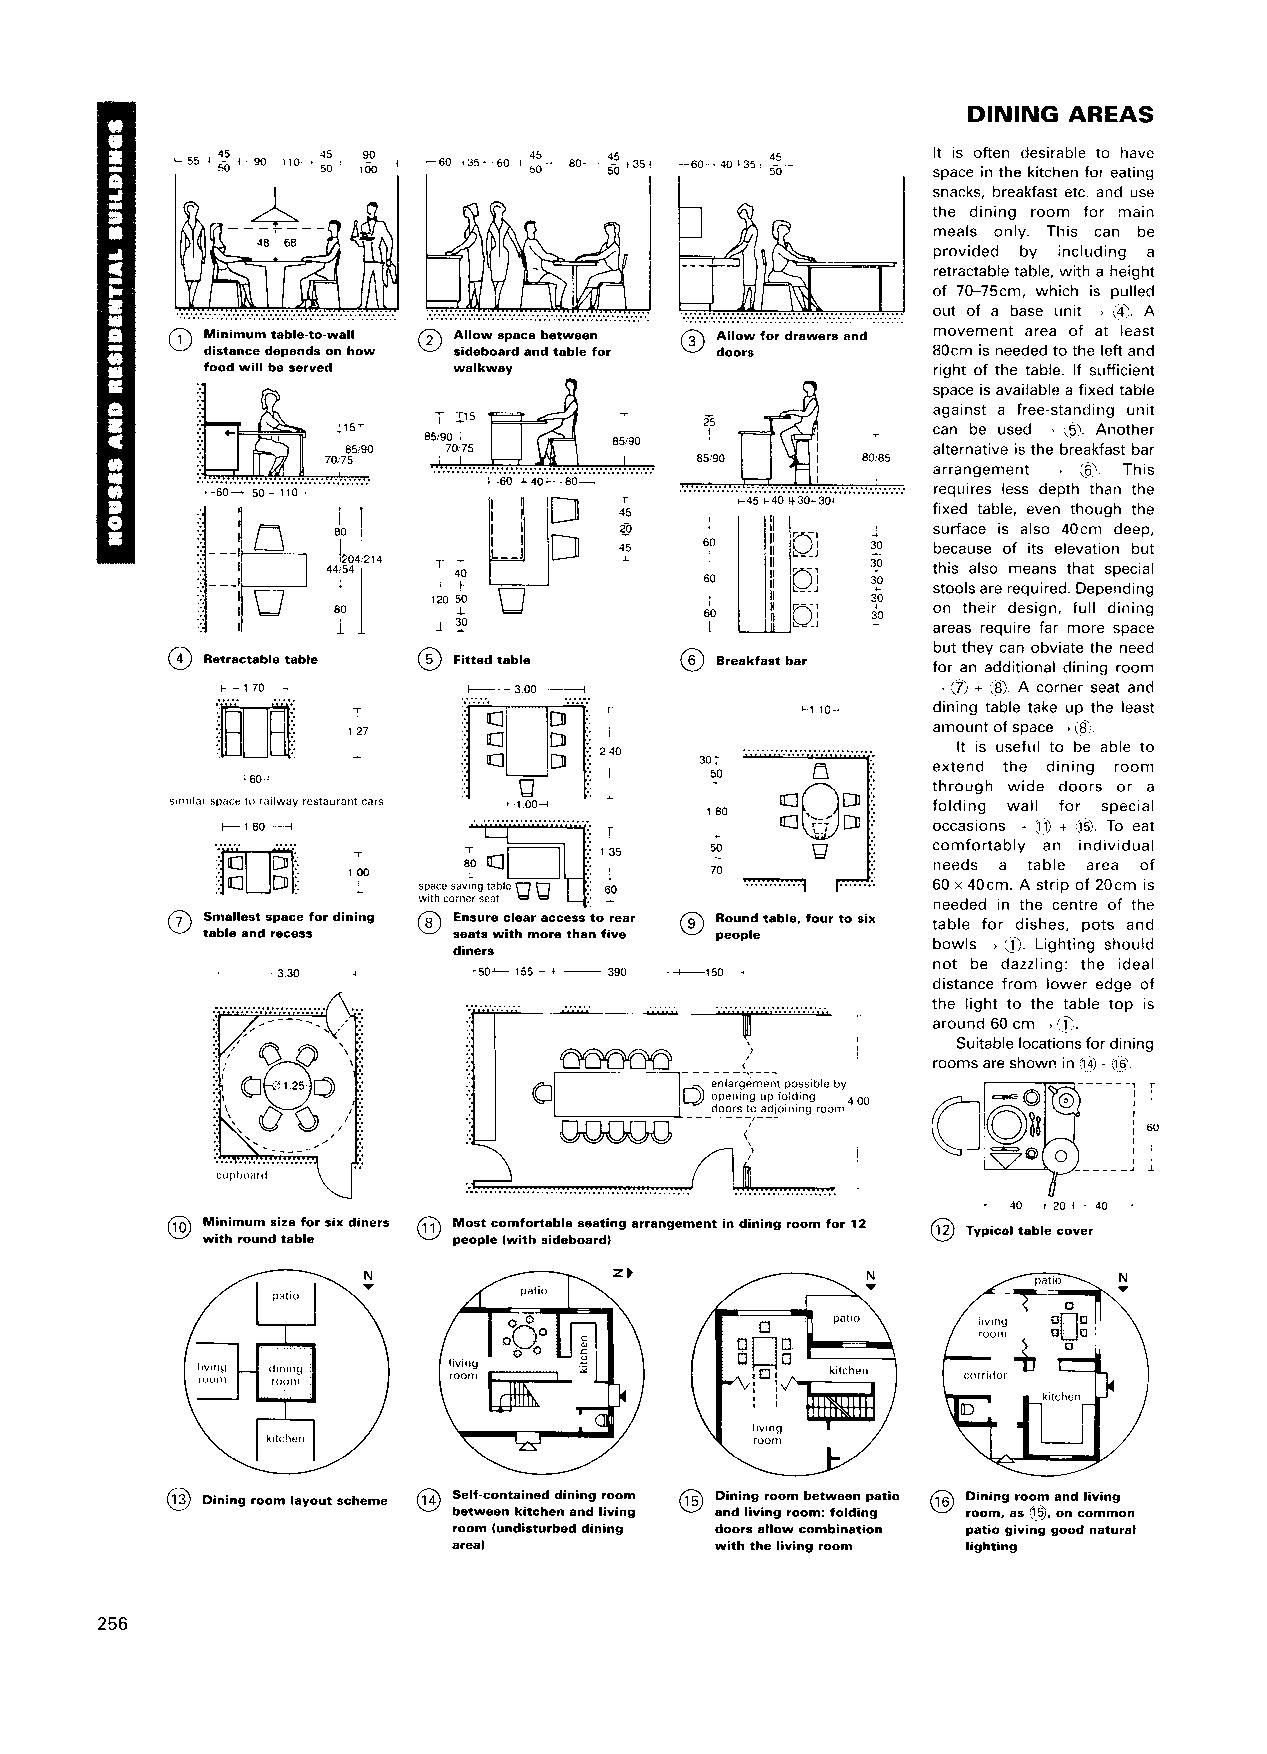  Neufert Architects' Data_Ernst Neufert_9781405192538_John Wiley and Sons Ltd 